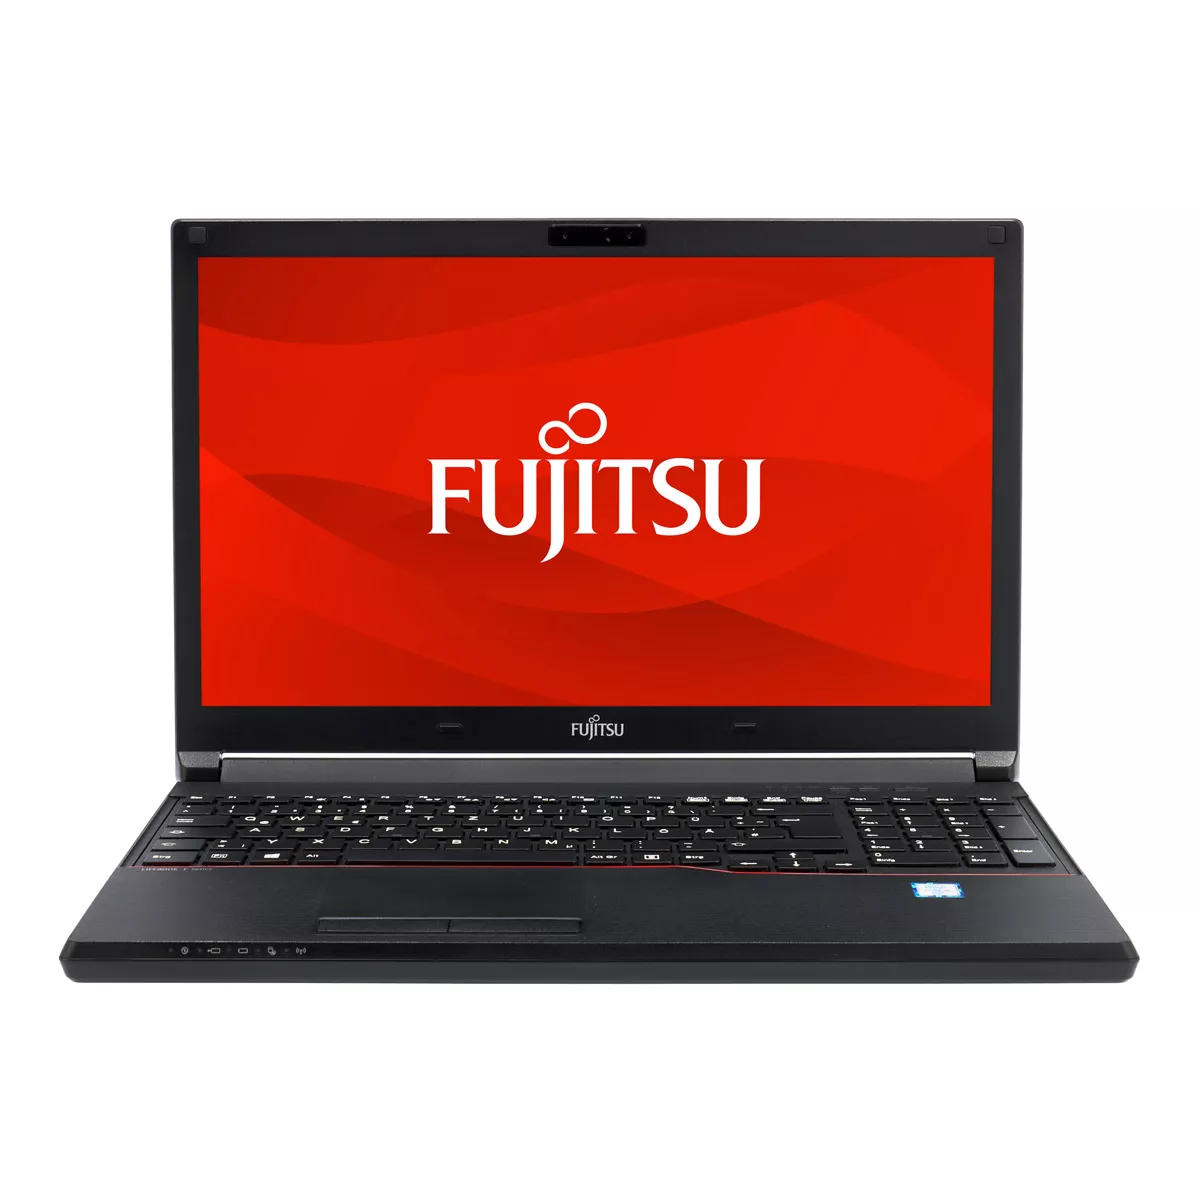 Fujitsu Lifebook E557 Core i3 7100U 8 GB 128 GB SSD A+